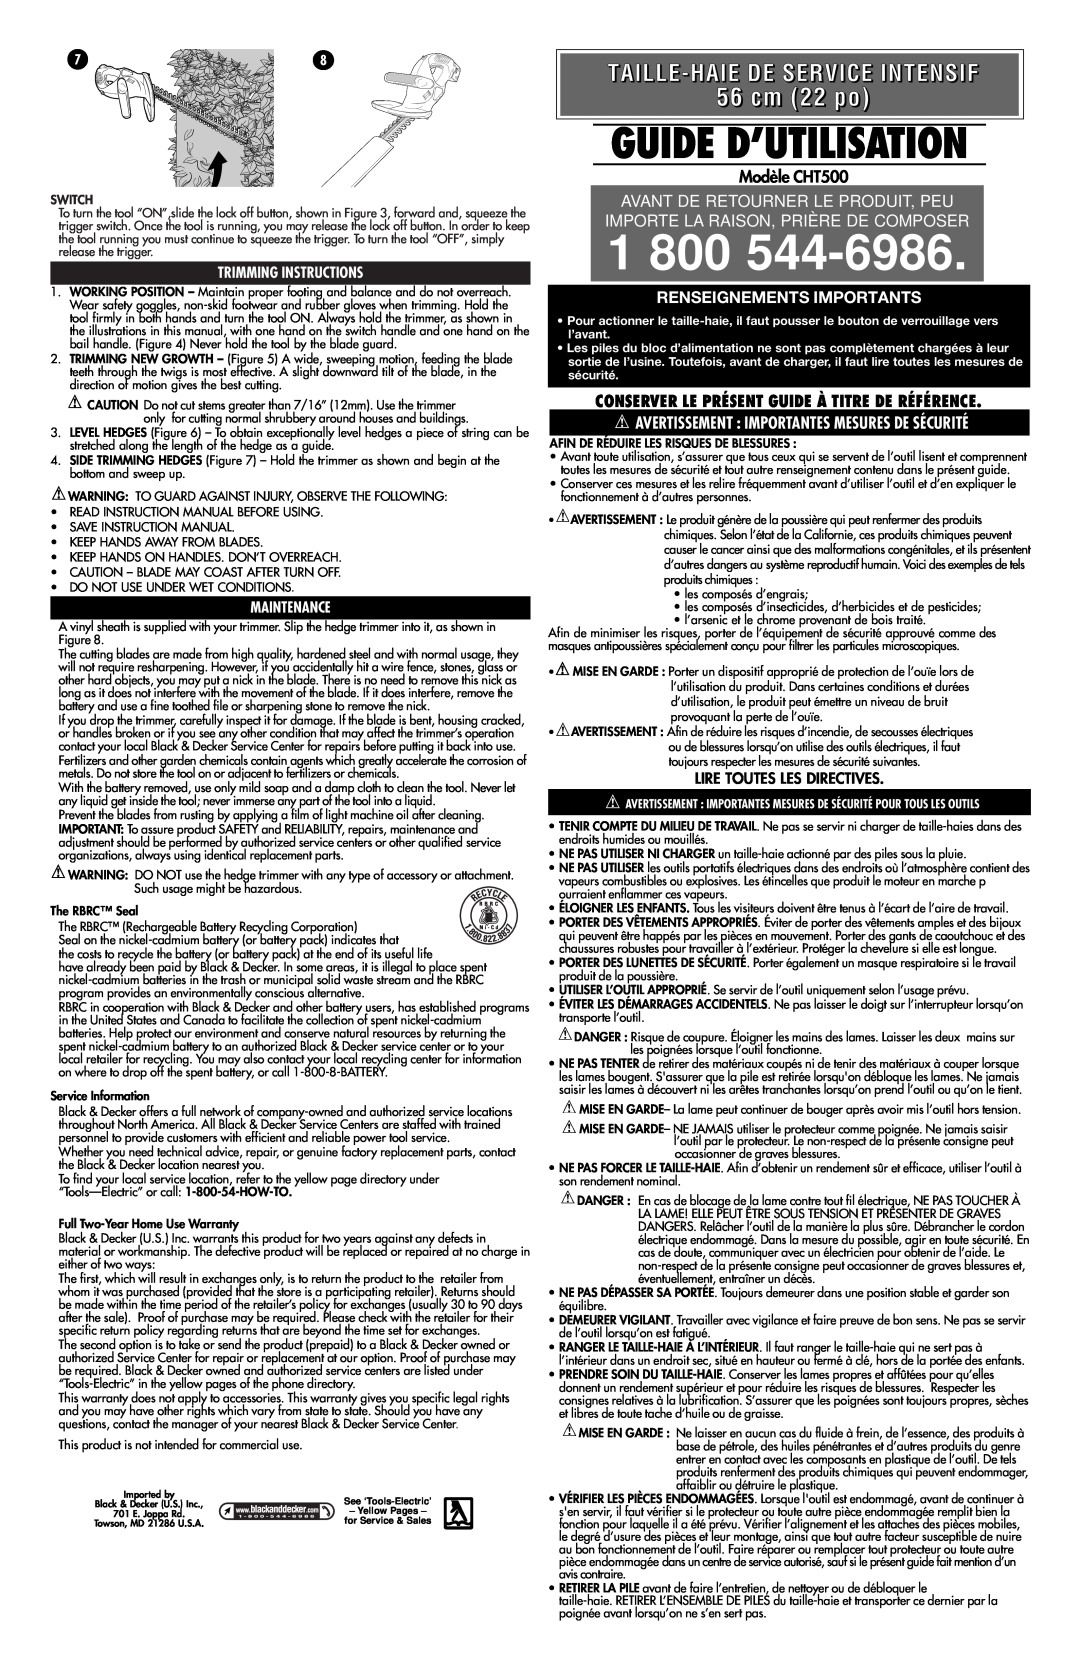 Black & Decker CHT500 56 cm 22 po, Taille-Haie De Service Intensif, Renseignements Importants, Trimming Instructions 